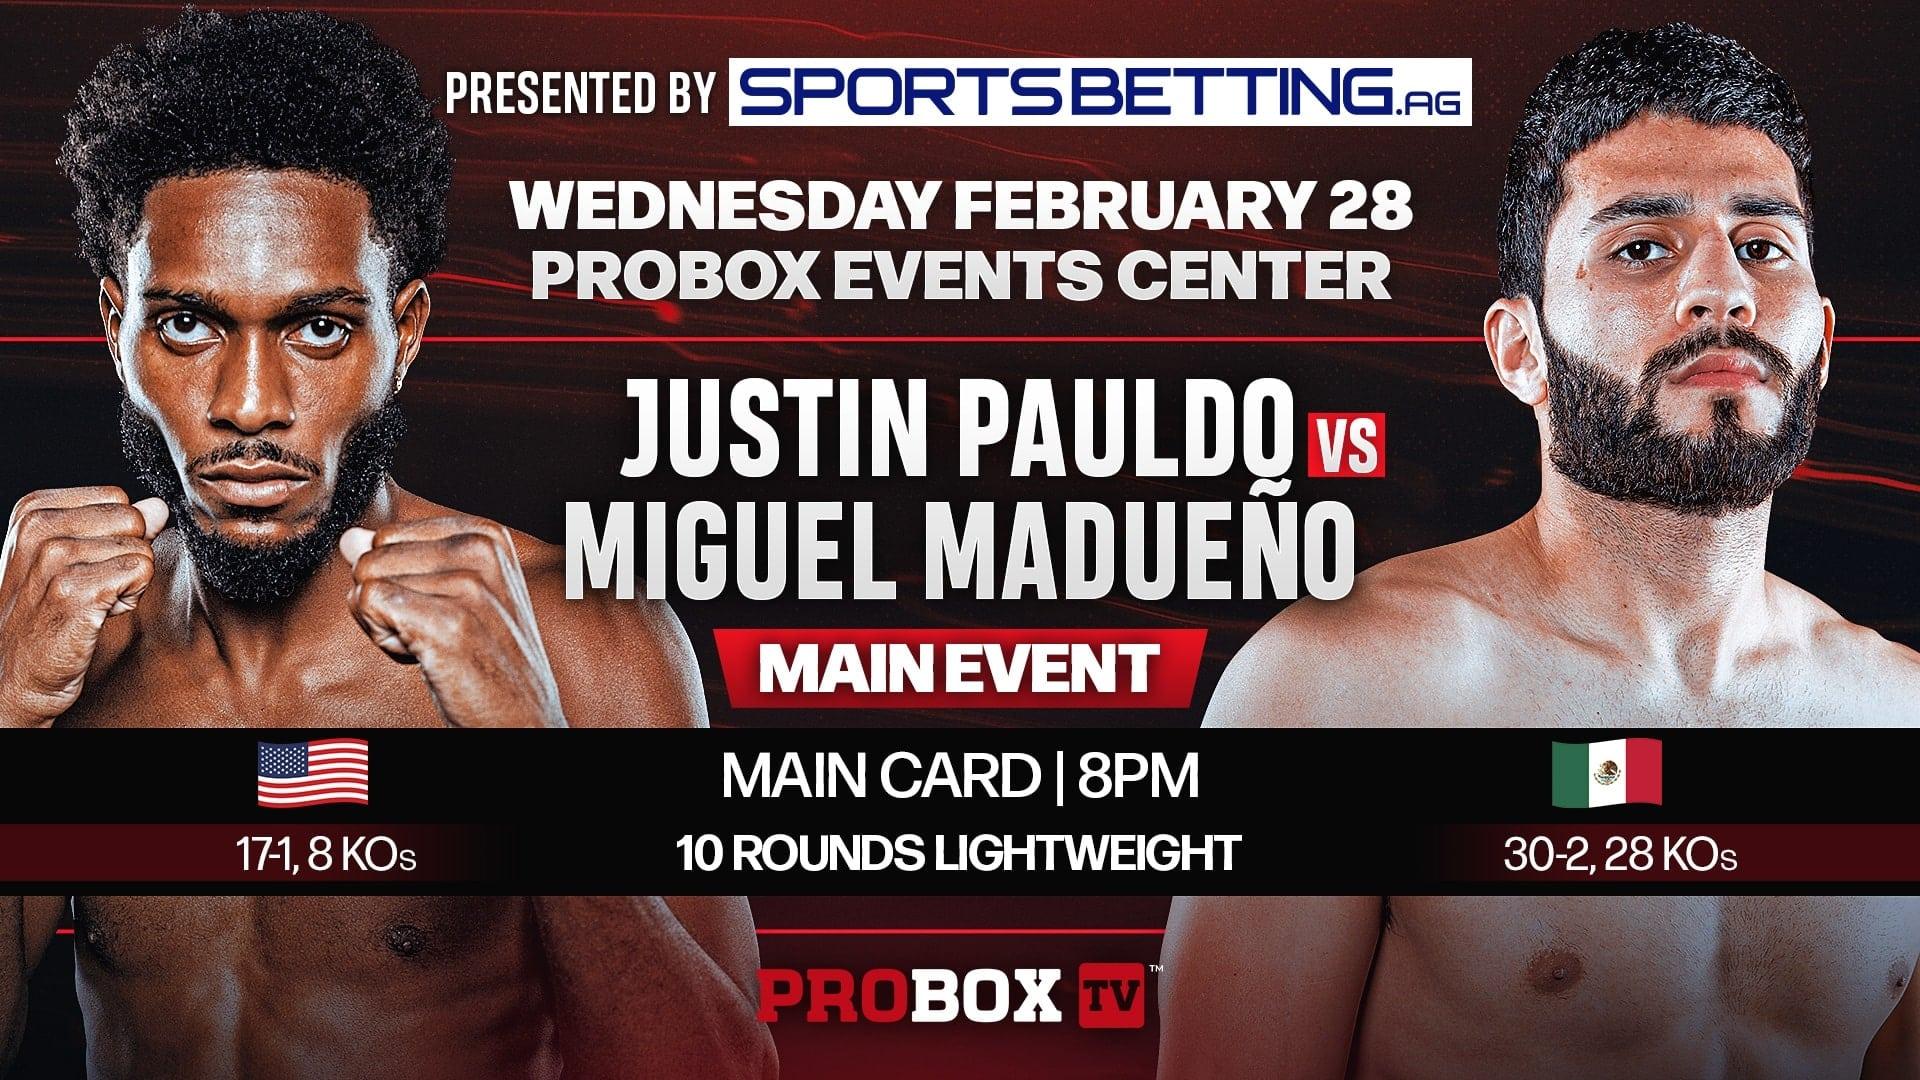 Justin Pauldo vs. Miguel Madueno backdrop